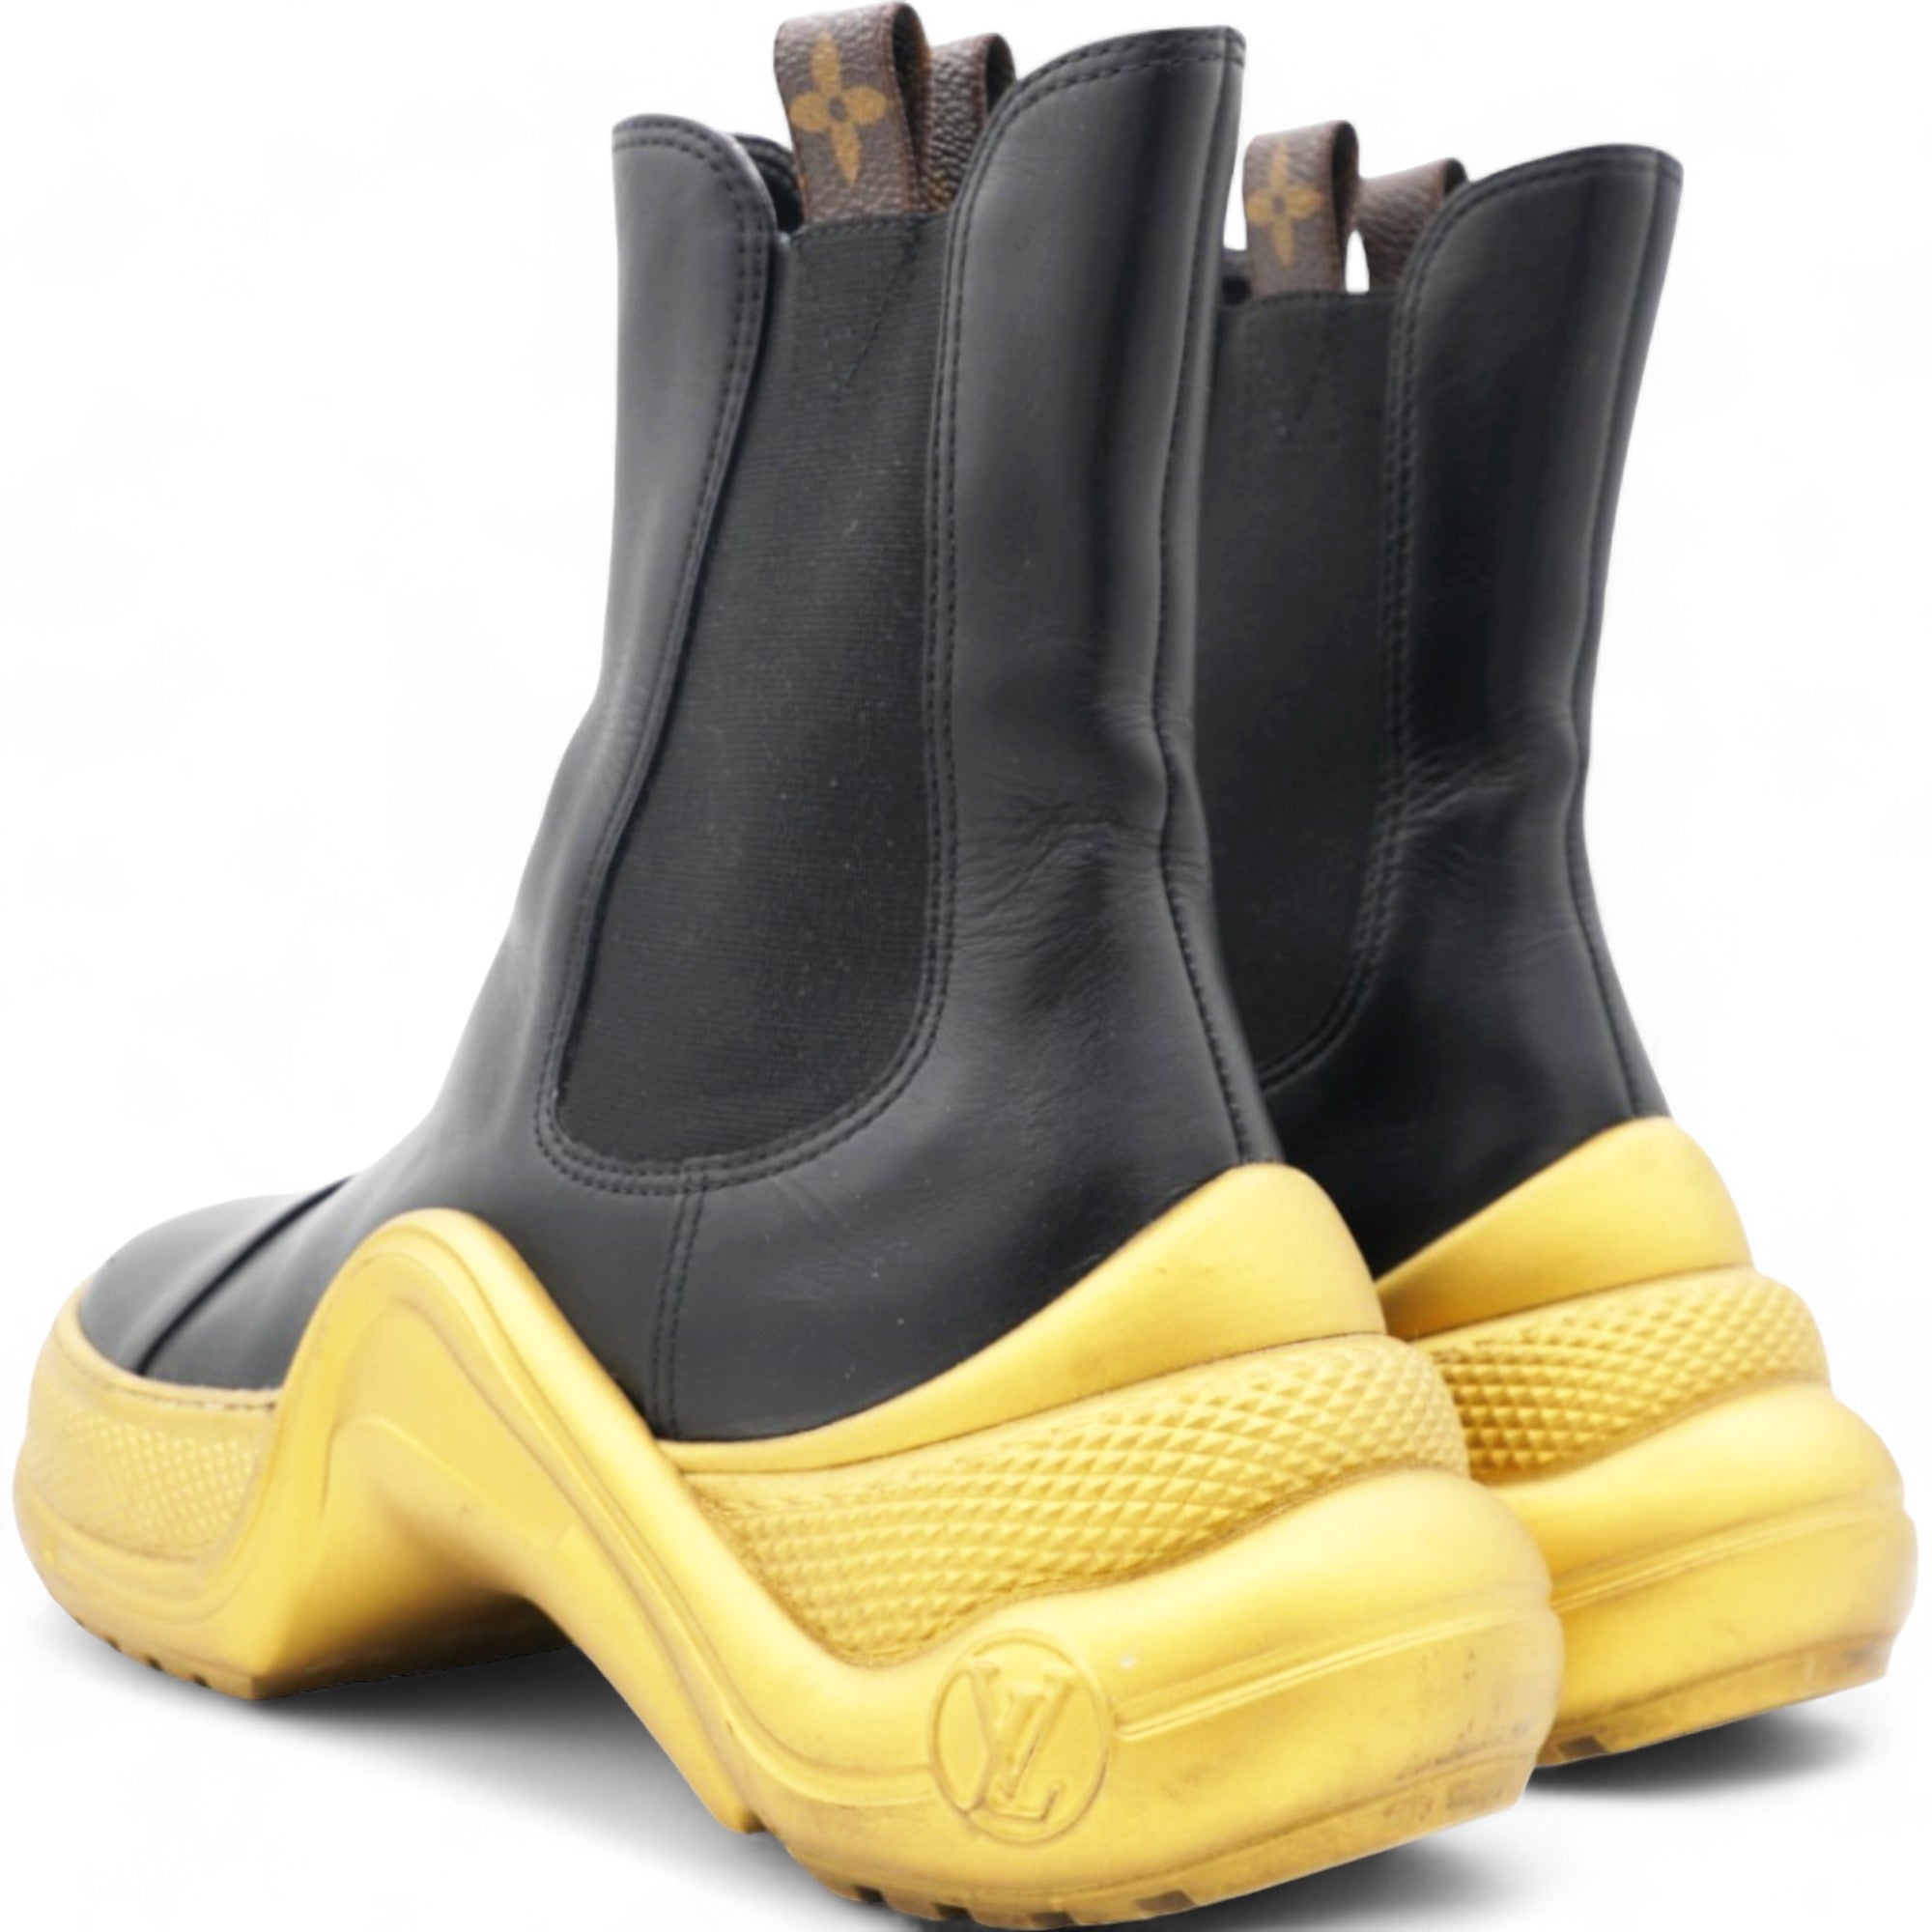 Stretch Textile Monogram LV Archlight Sneaker Boots Black Gold Size 37